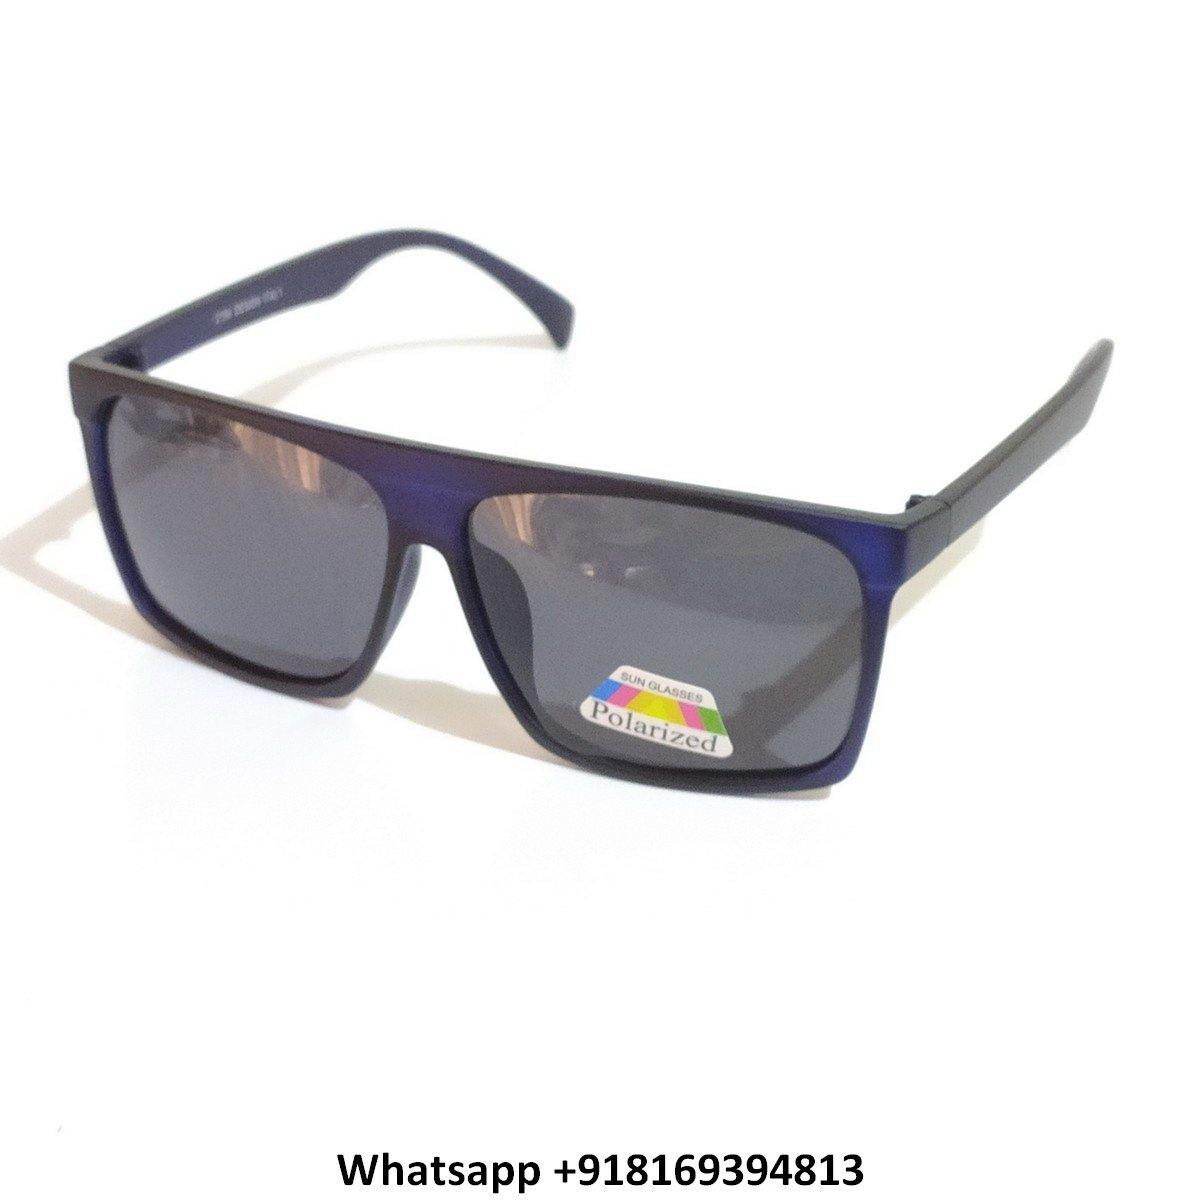 Trendy Square Polarized Sunglasses for Men and Women 2156BL